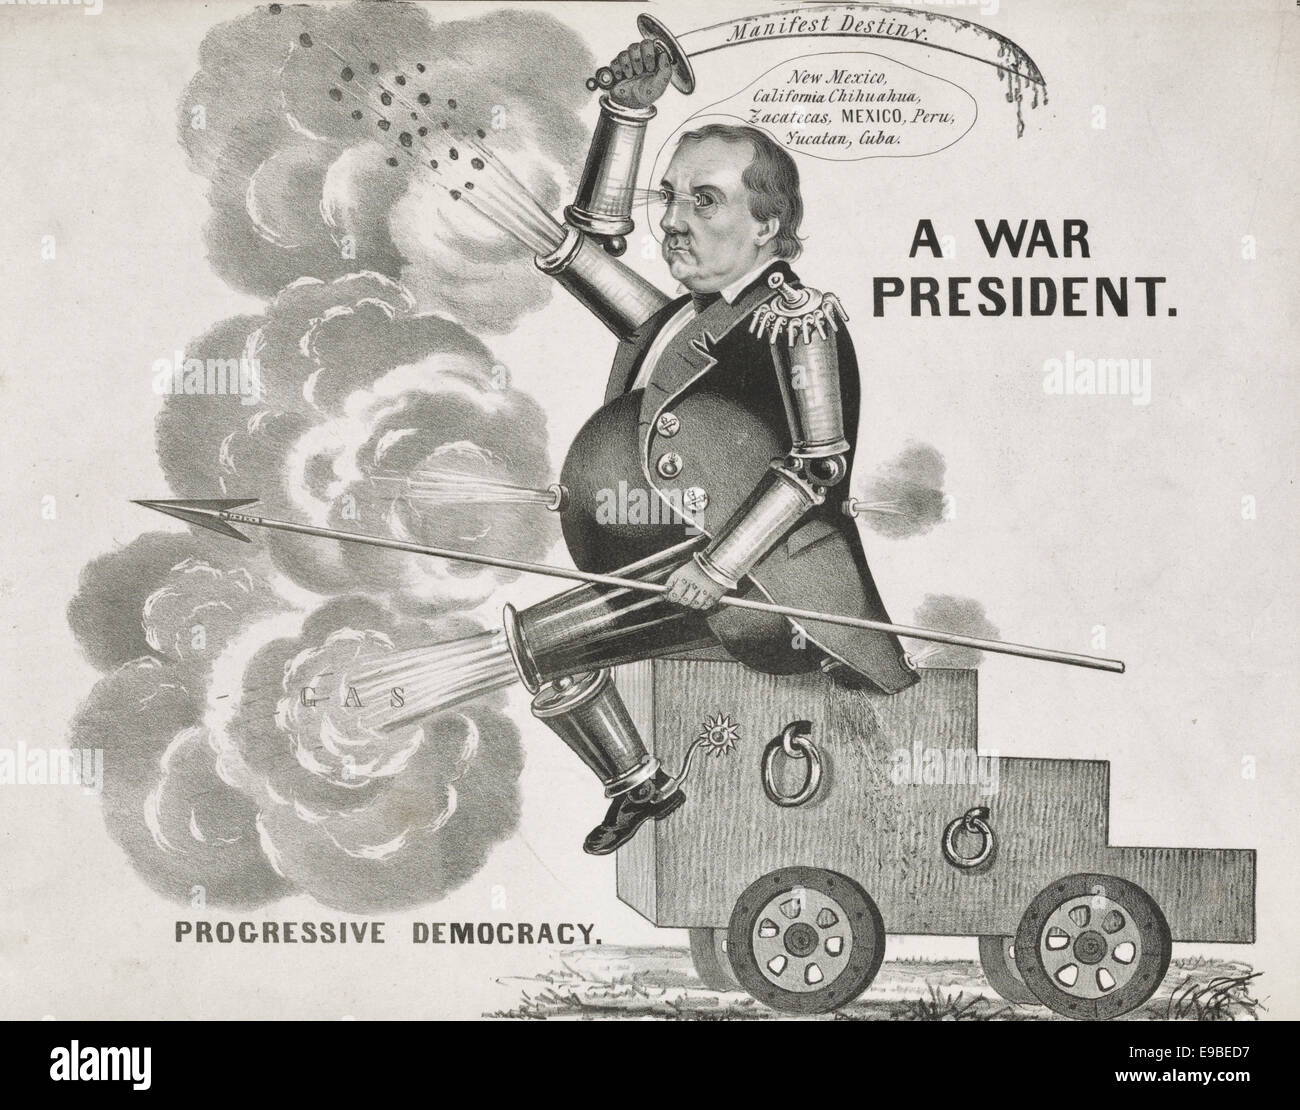 A war President, Progressive democracy, presidential campaign 1848 Stock Photo